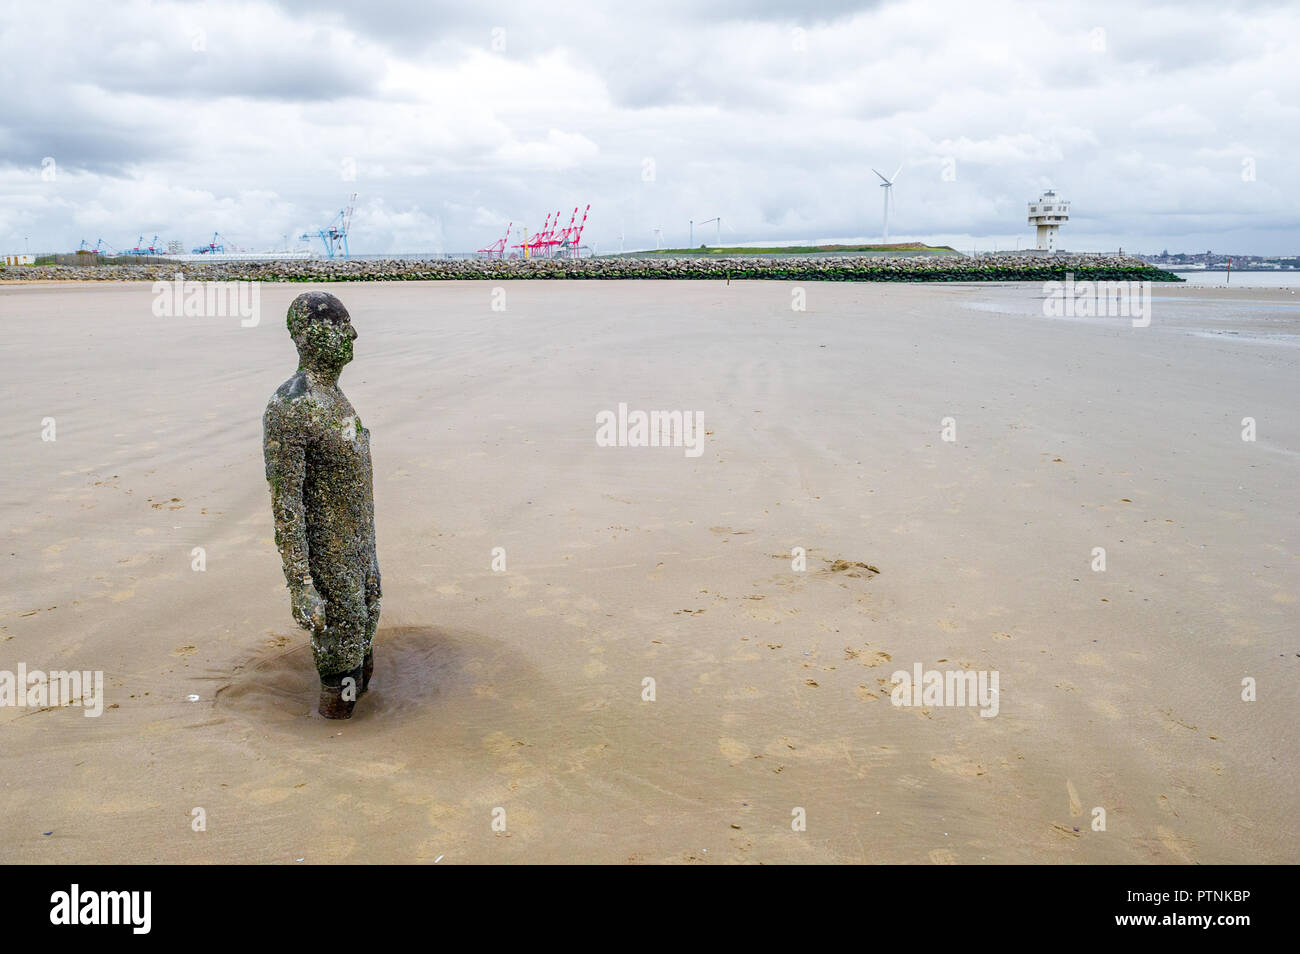 Sir Antony Gormley cast iron figures on Crosby Beach, Liverpool, U.K. Stock Photo